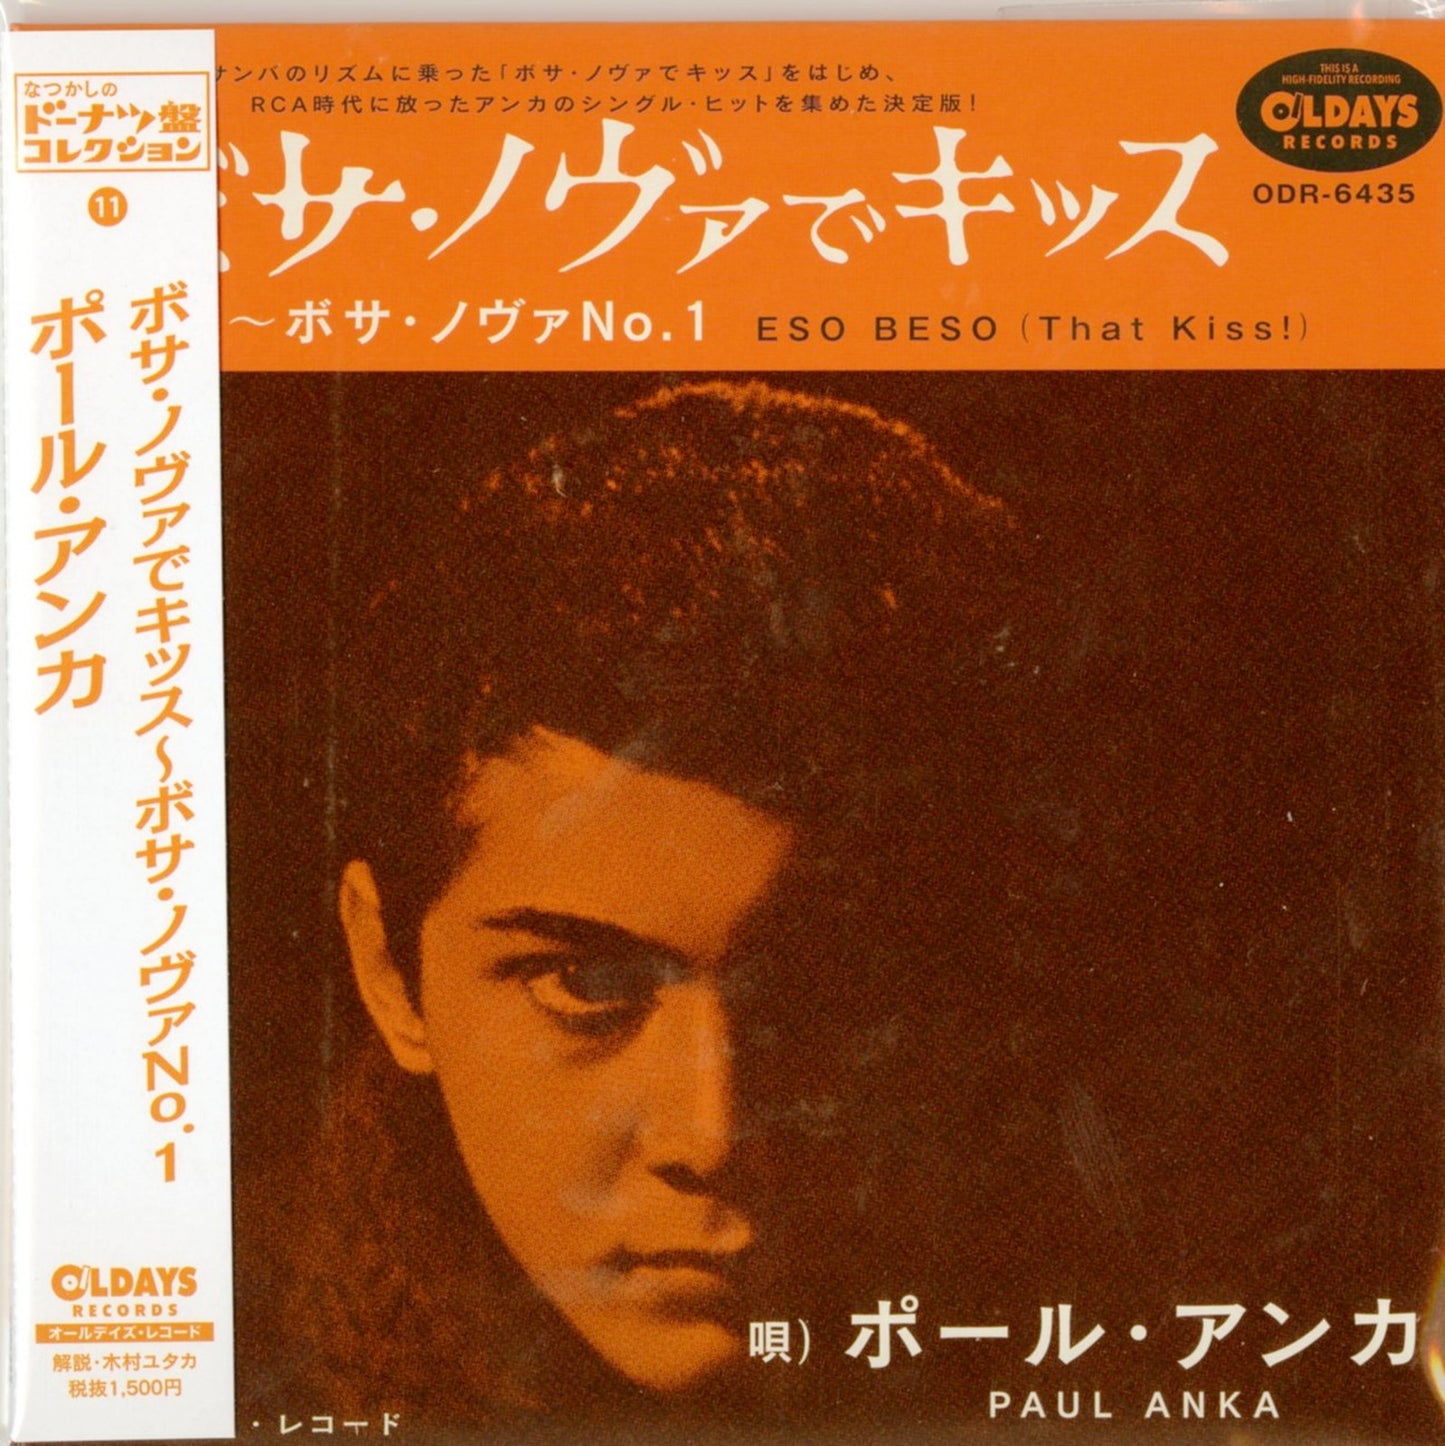 Paul Anka - Eso Beso ( That Kiss!) - Japan  Mini LP CD